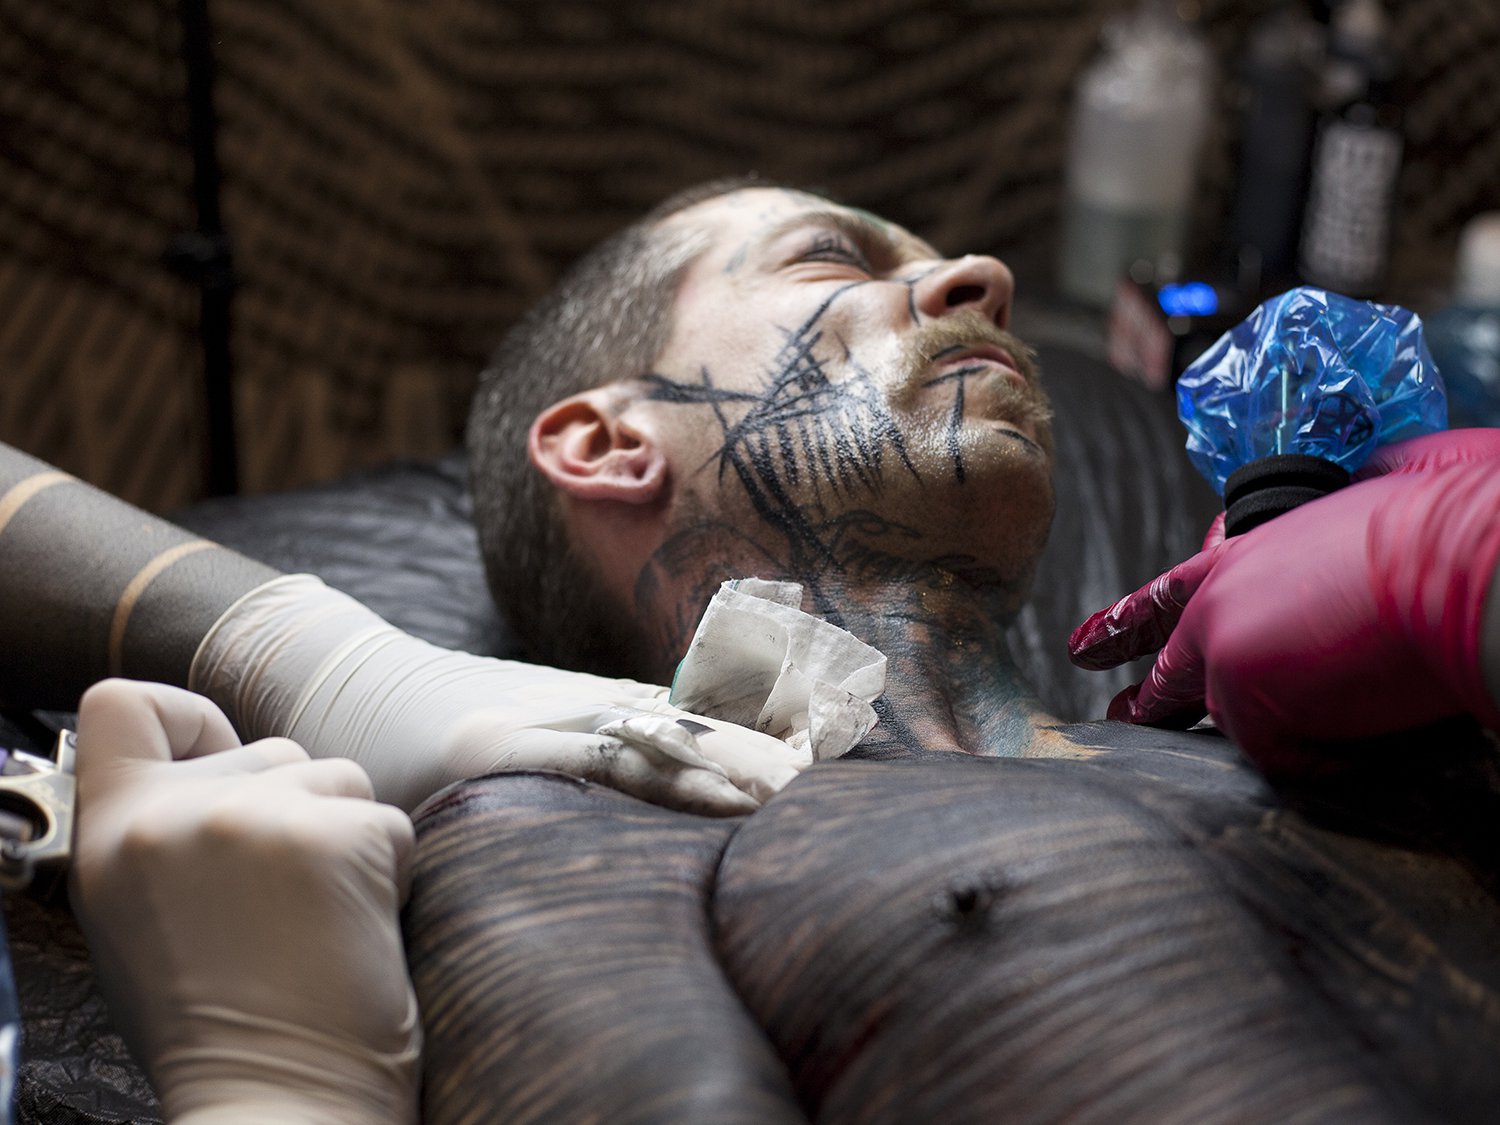 The Brutal Black Project, tattoos that hurt